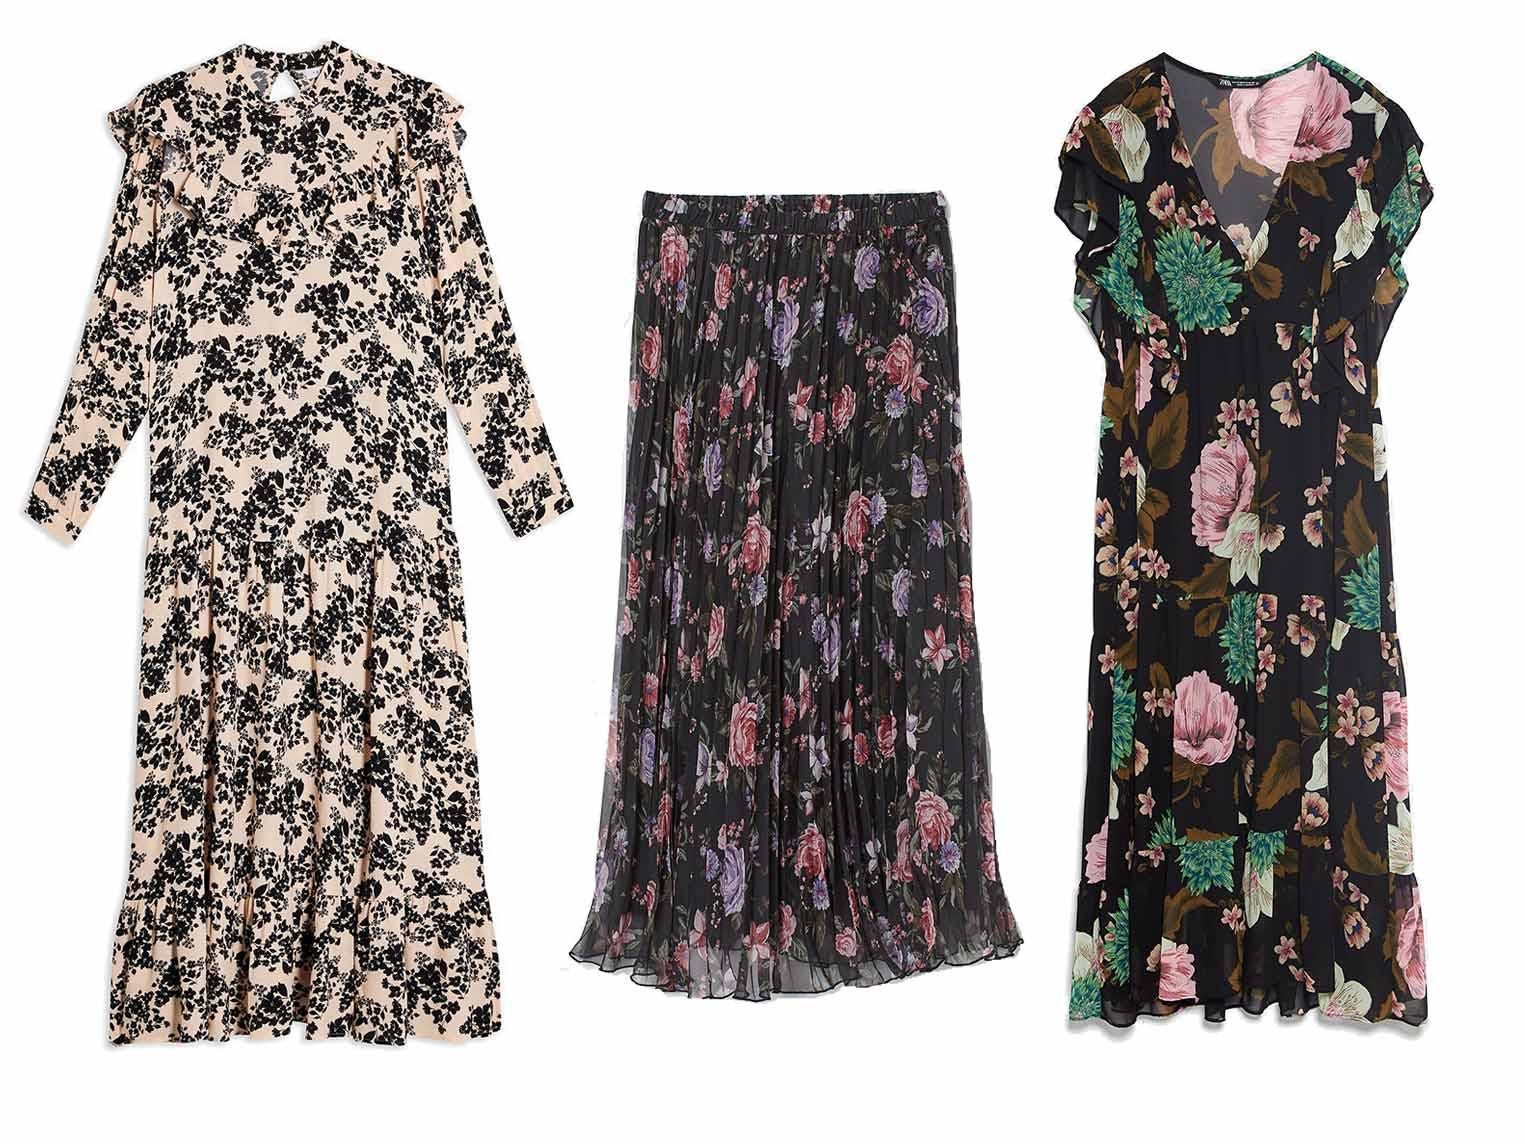 Floral Print Pintuck Ruffle Maxi Dress, £49, Topshop; Pleated Skirt, £19.99, H&amp;M; Floral Print Dress, £49.99, Zara